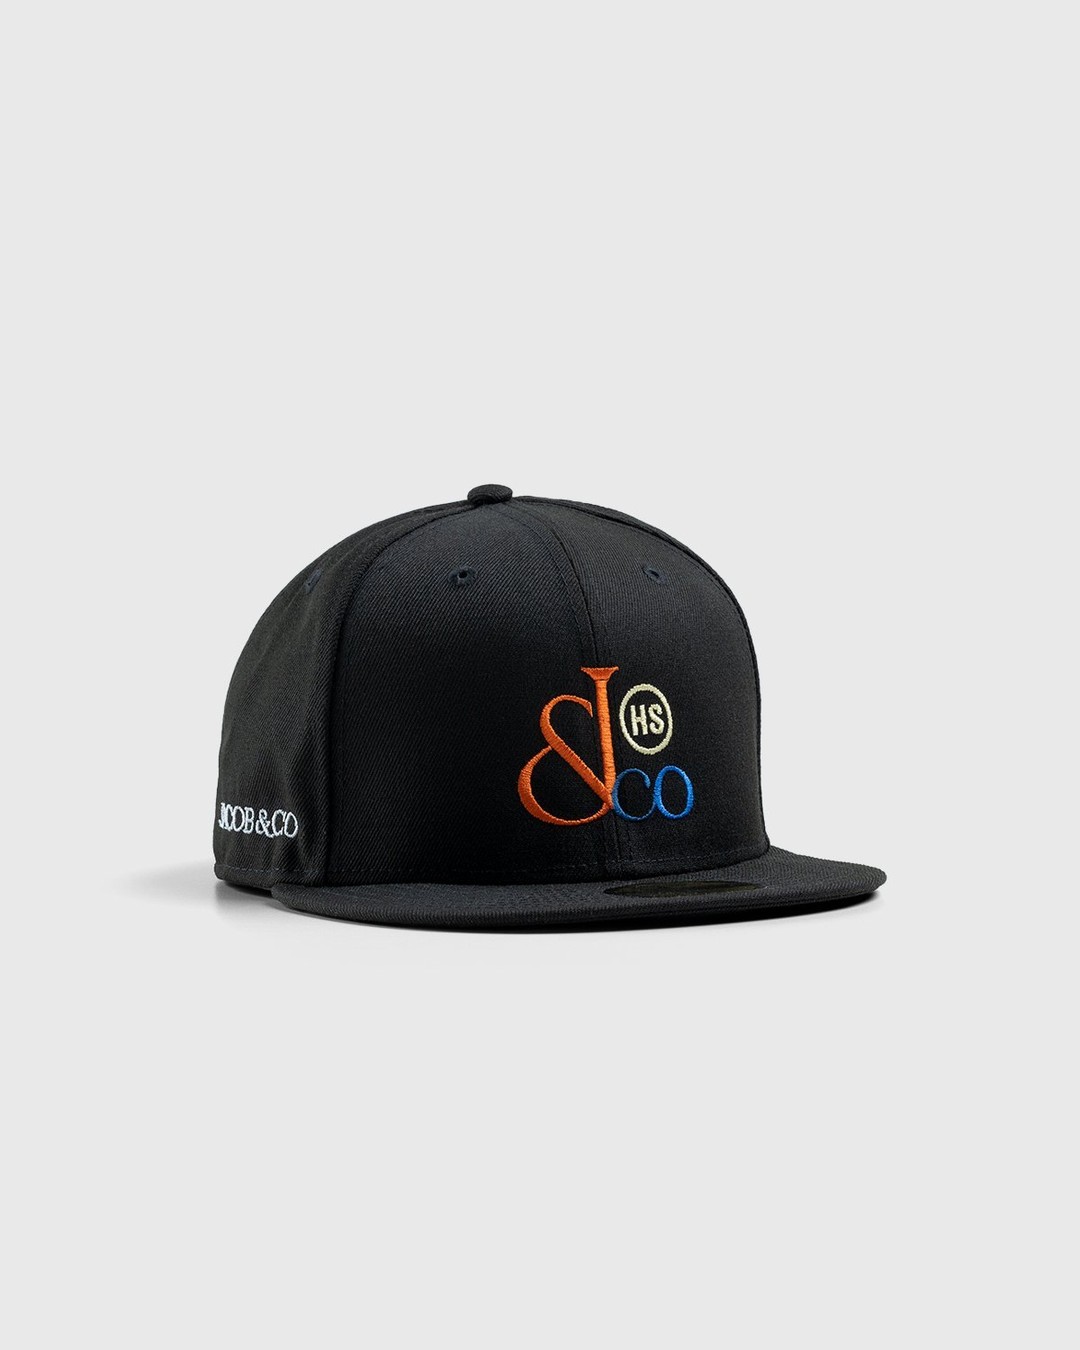 Jacob & Co. x Highsnobiety – Logo Cap Black - Caps - Black - Image 1